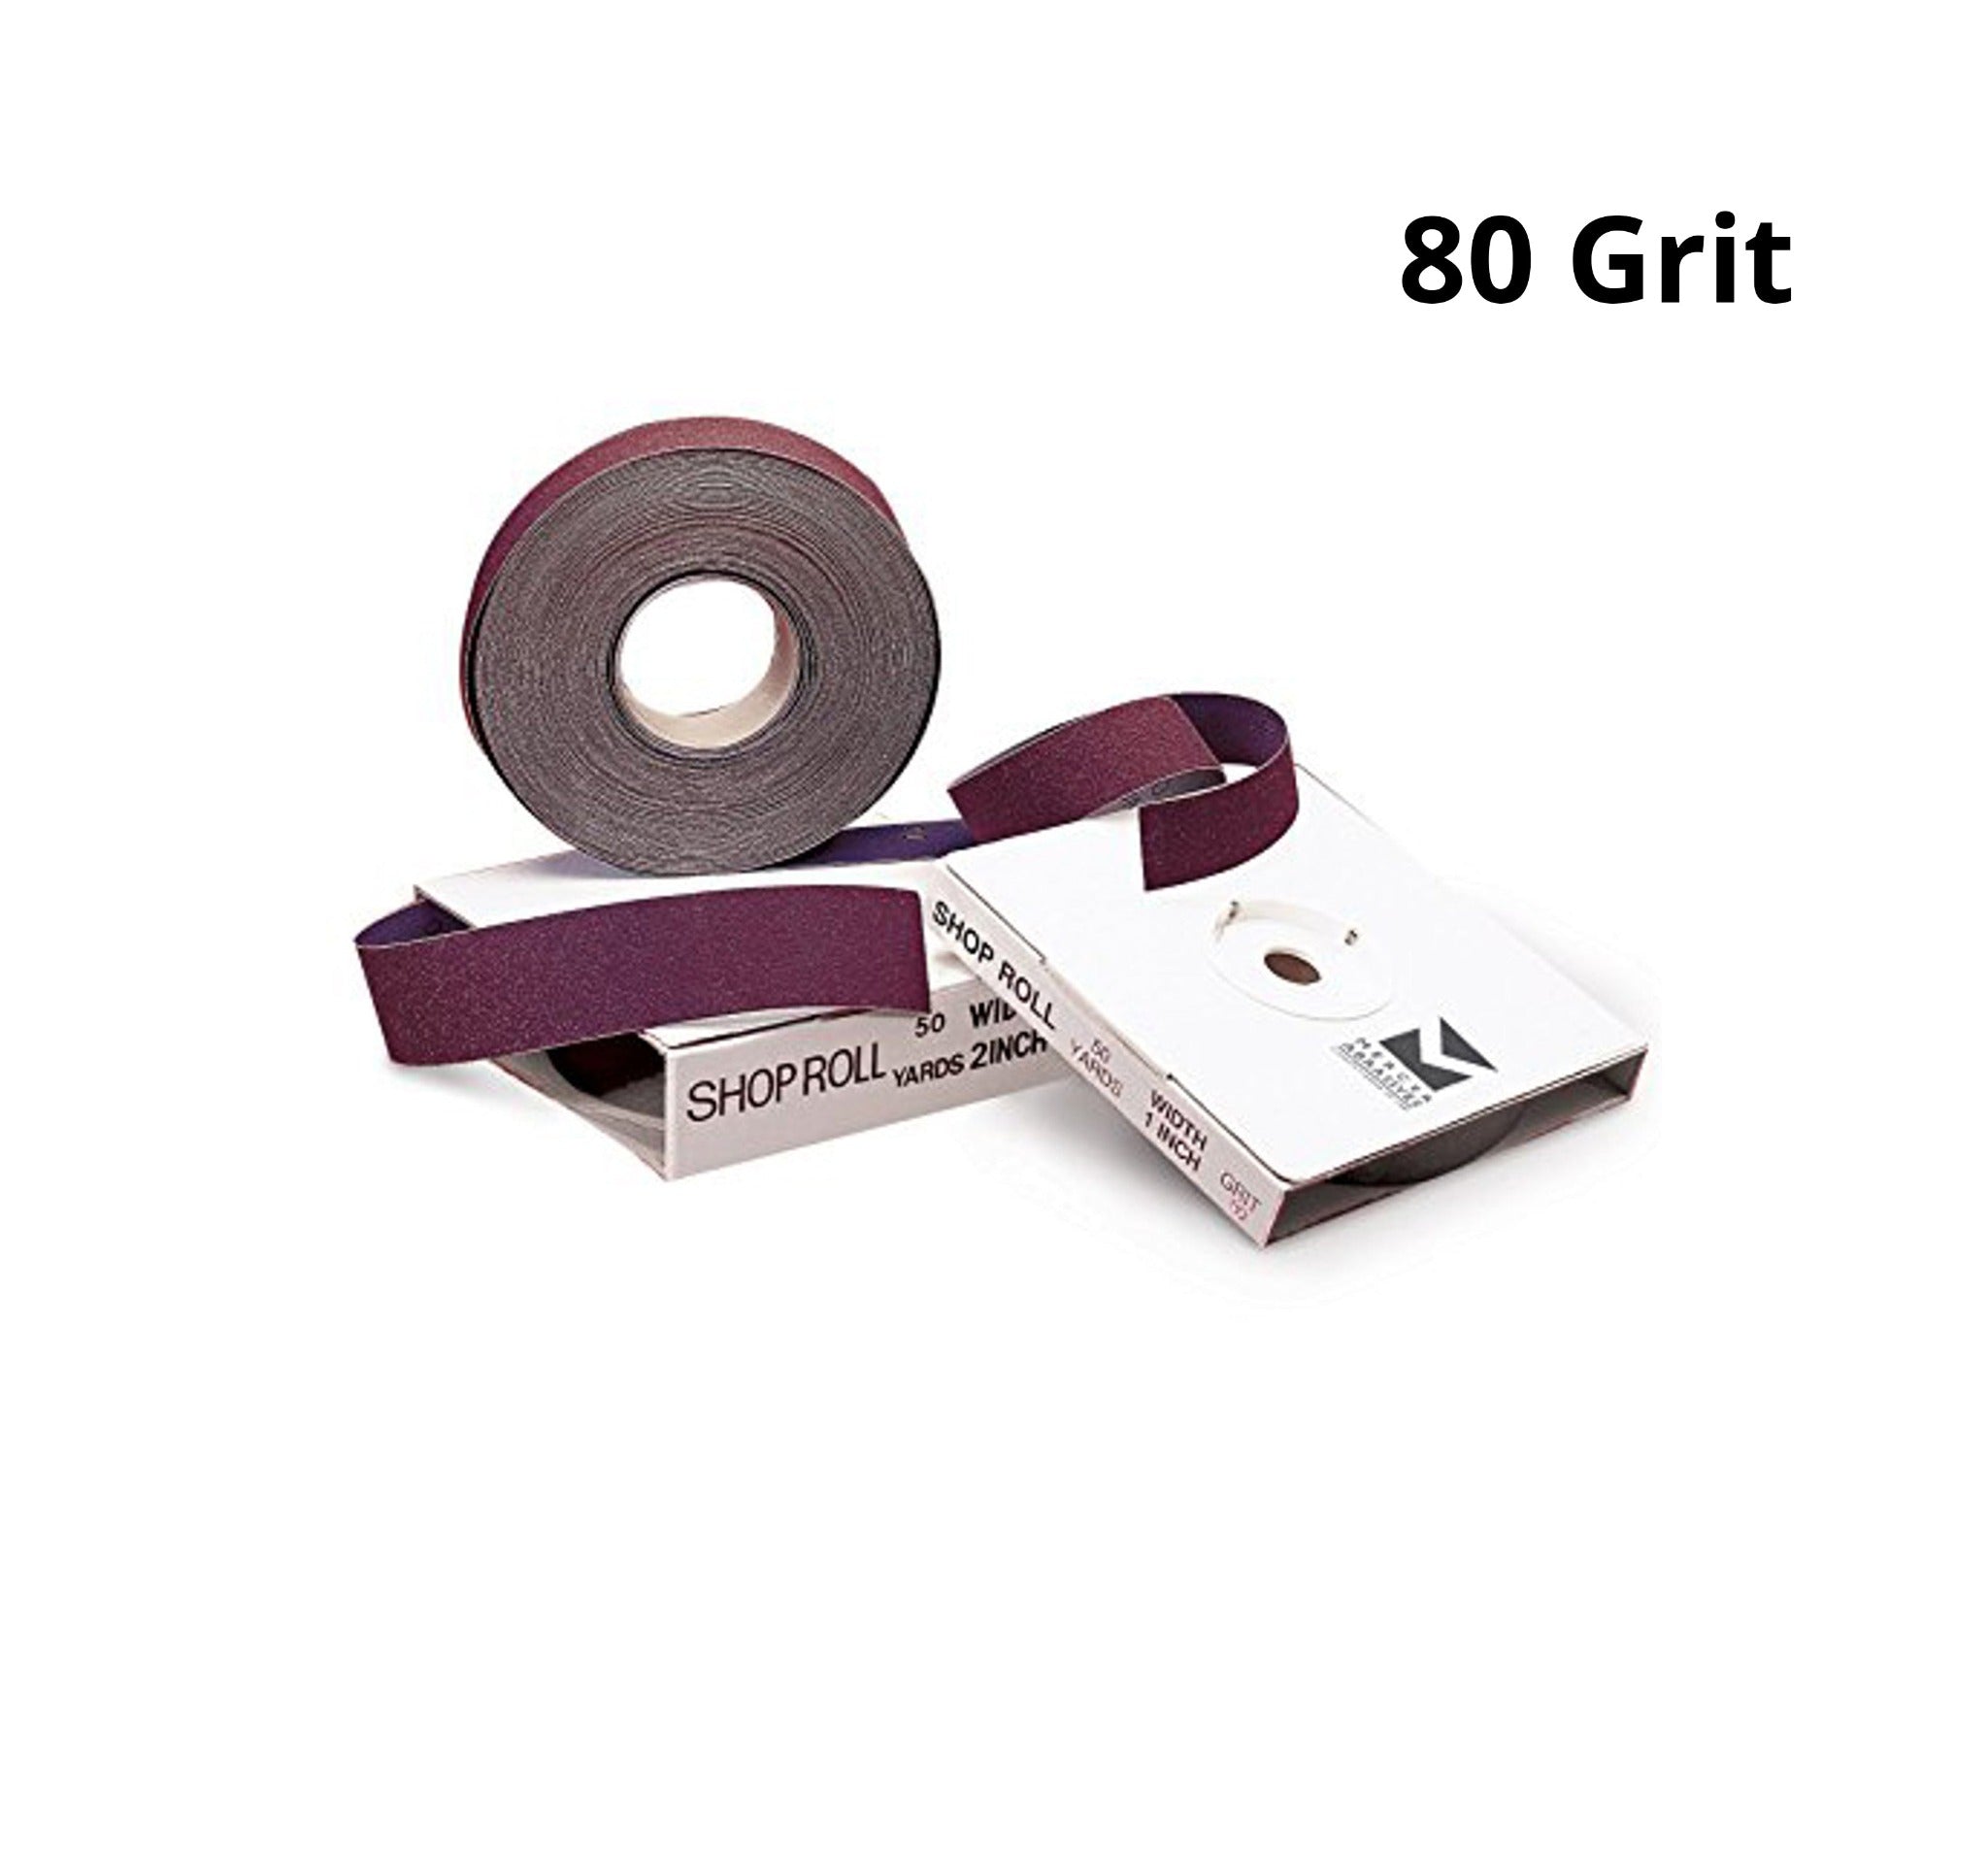 Aluminum Oxide Shop Roll 80 Grit 1” X 50 Yds